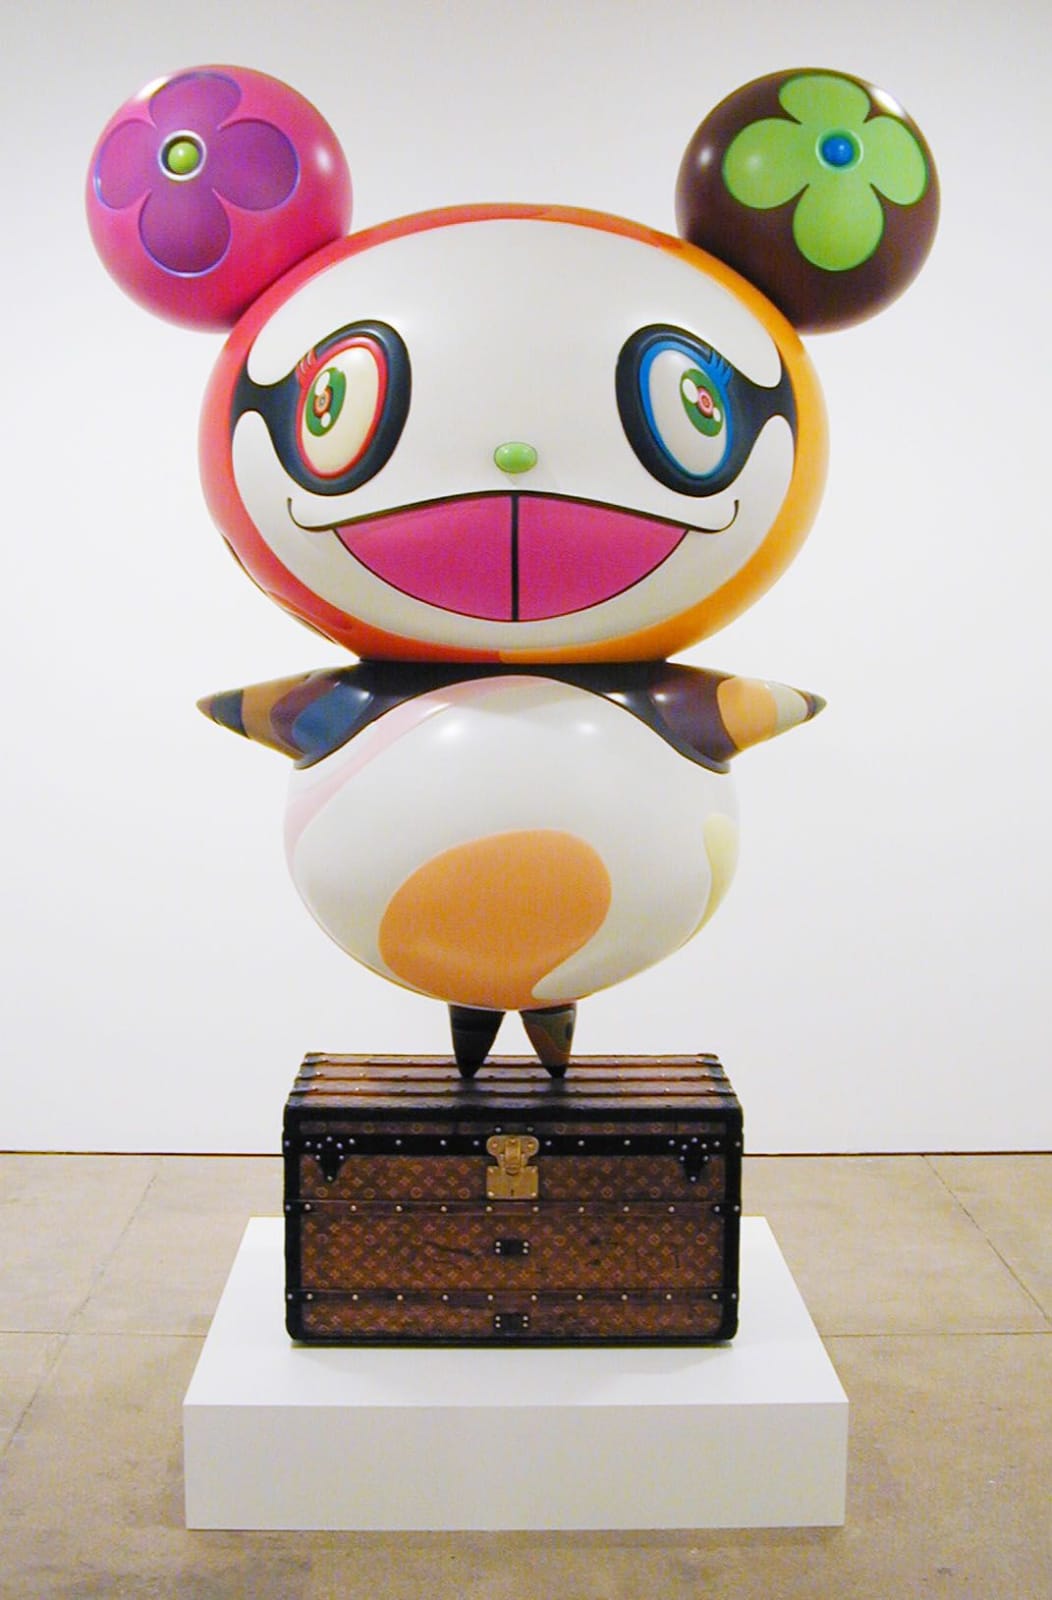 George on Instagram: “Takashi Murakami // Panda (2003), fibreglass